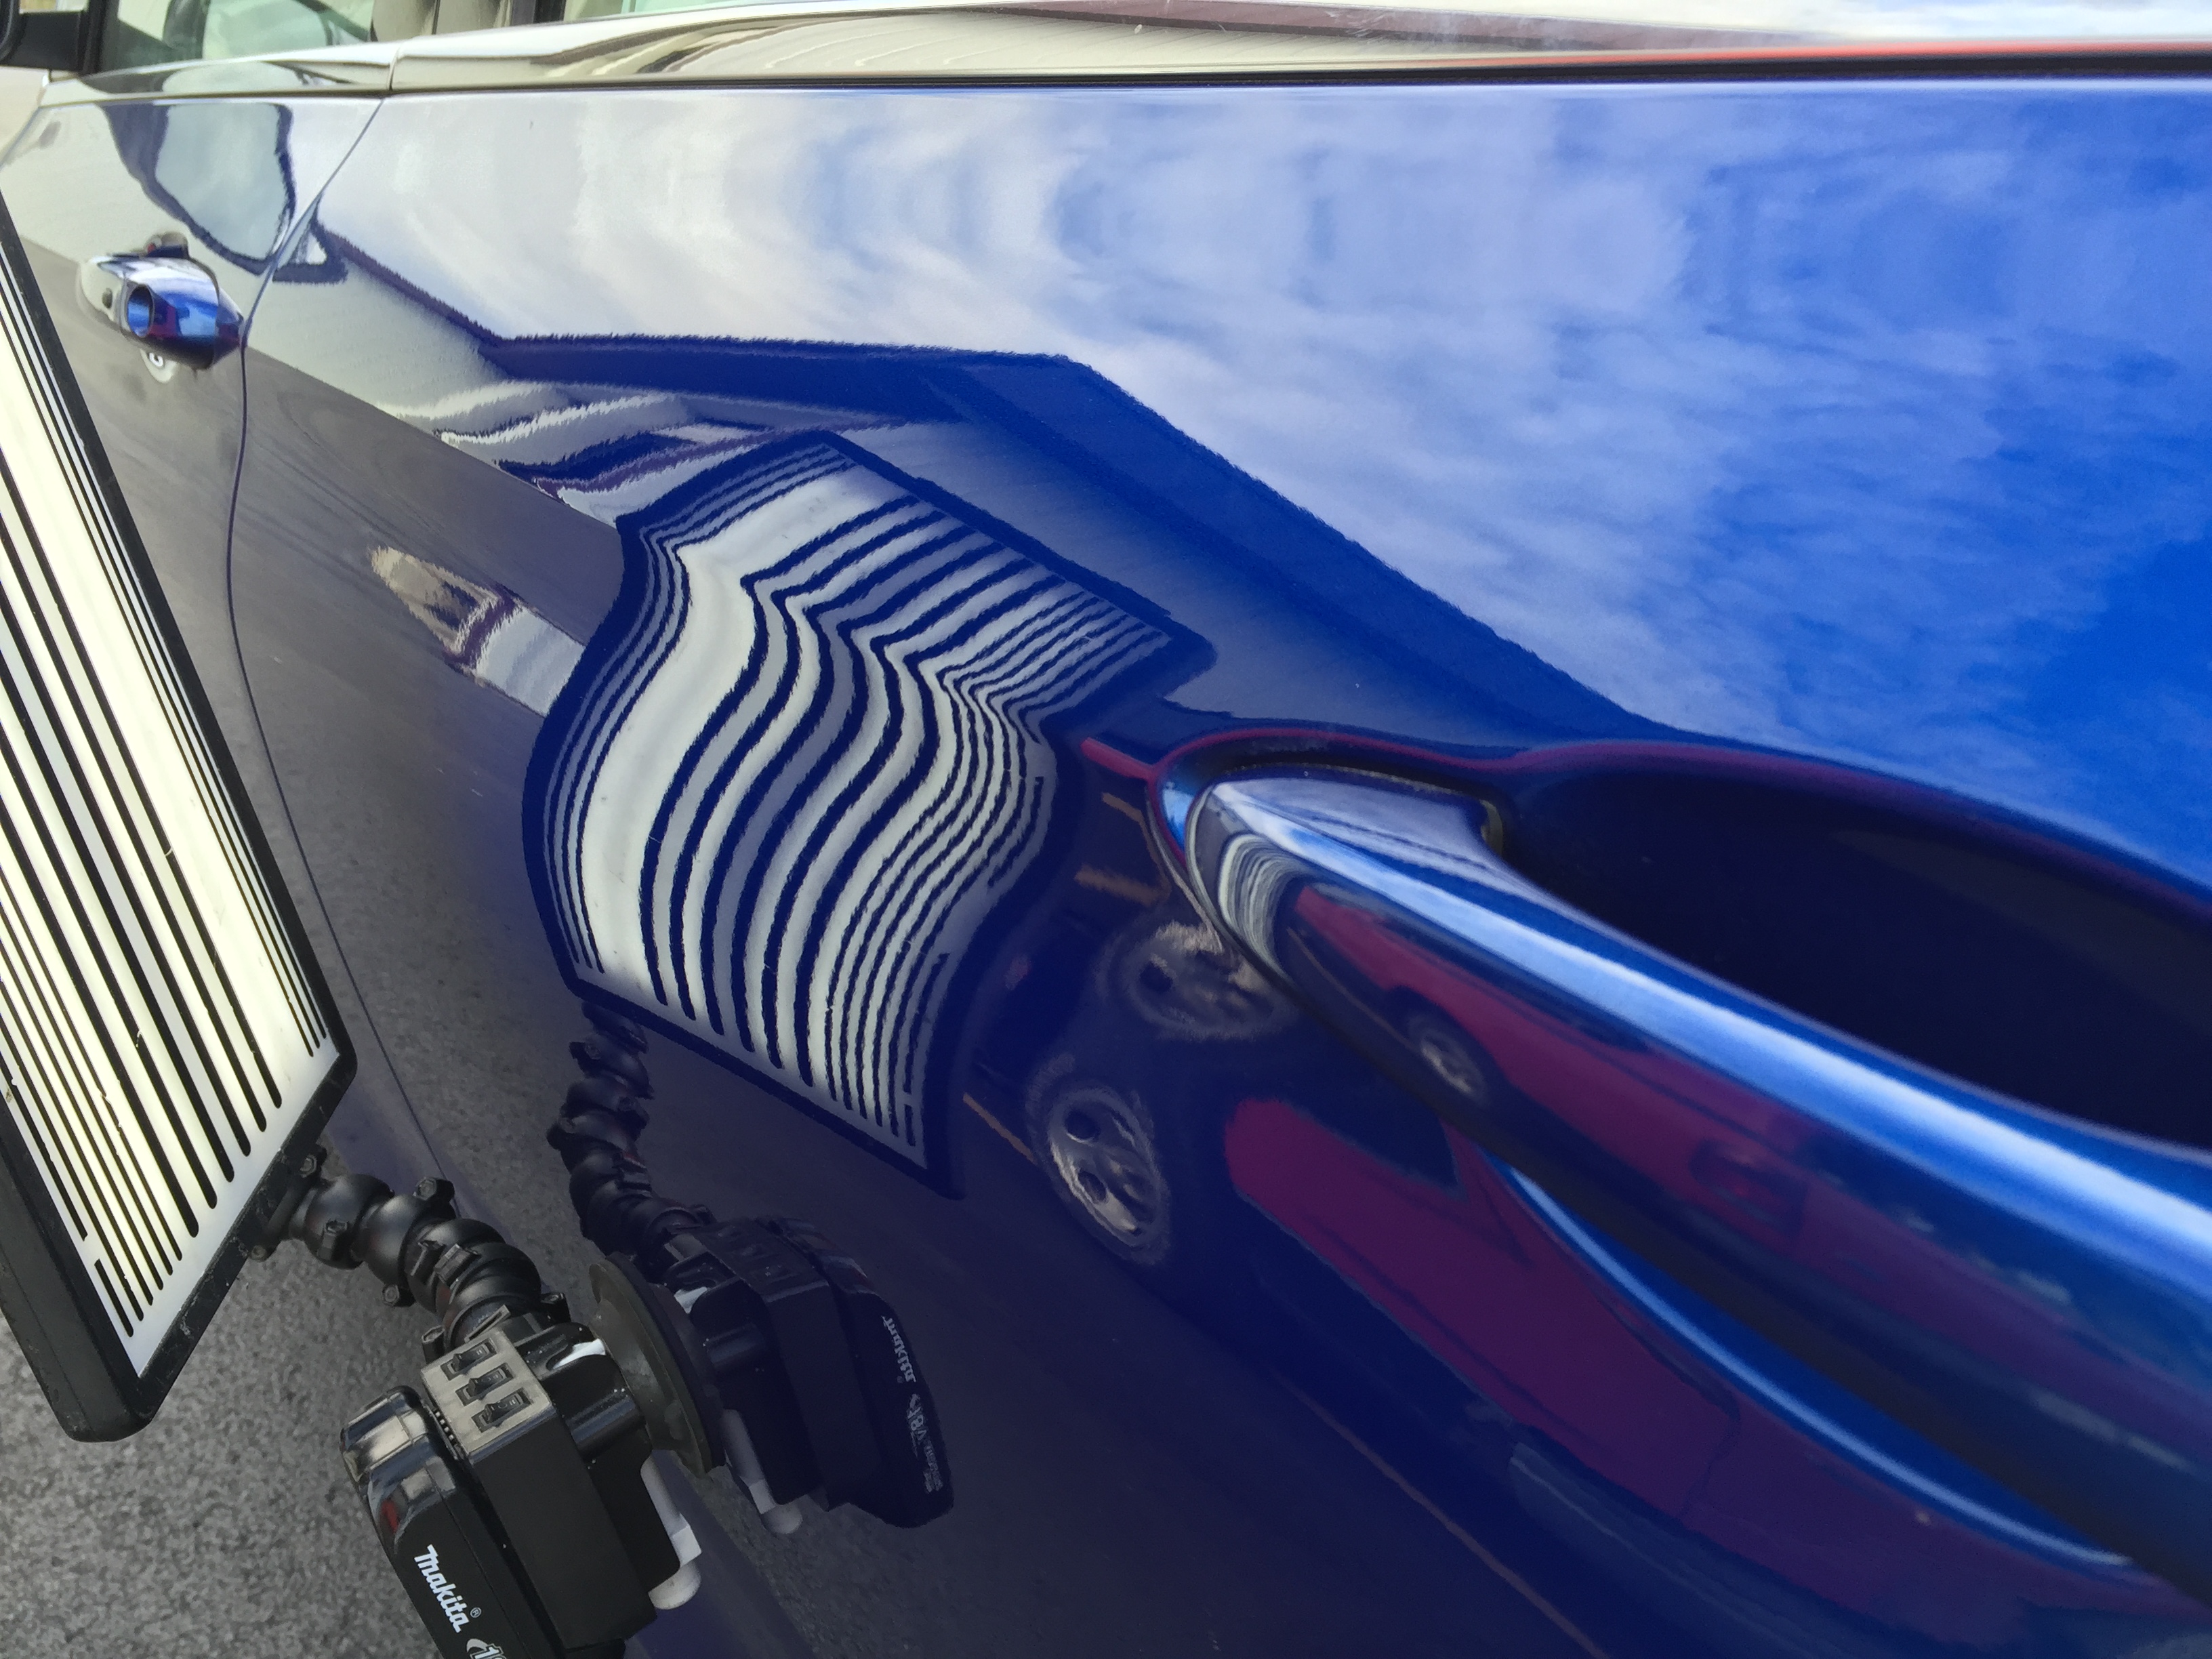 2016 Chrysler 200 Drivers rear door, Mobile Dent Repair Springfield Il